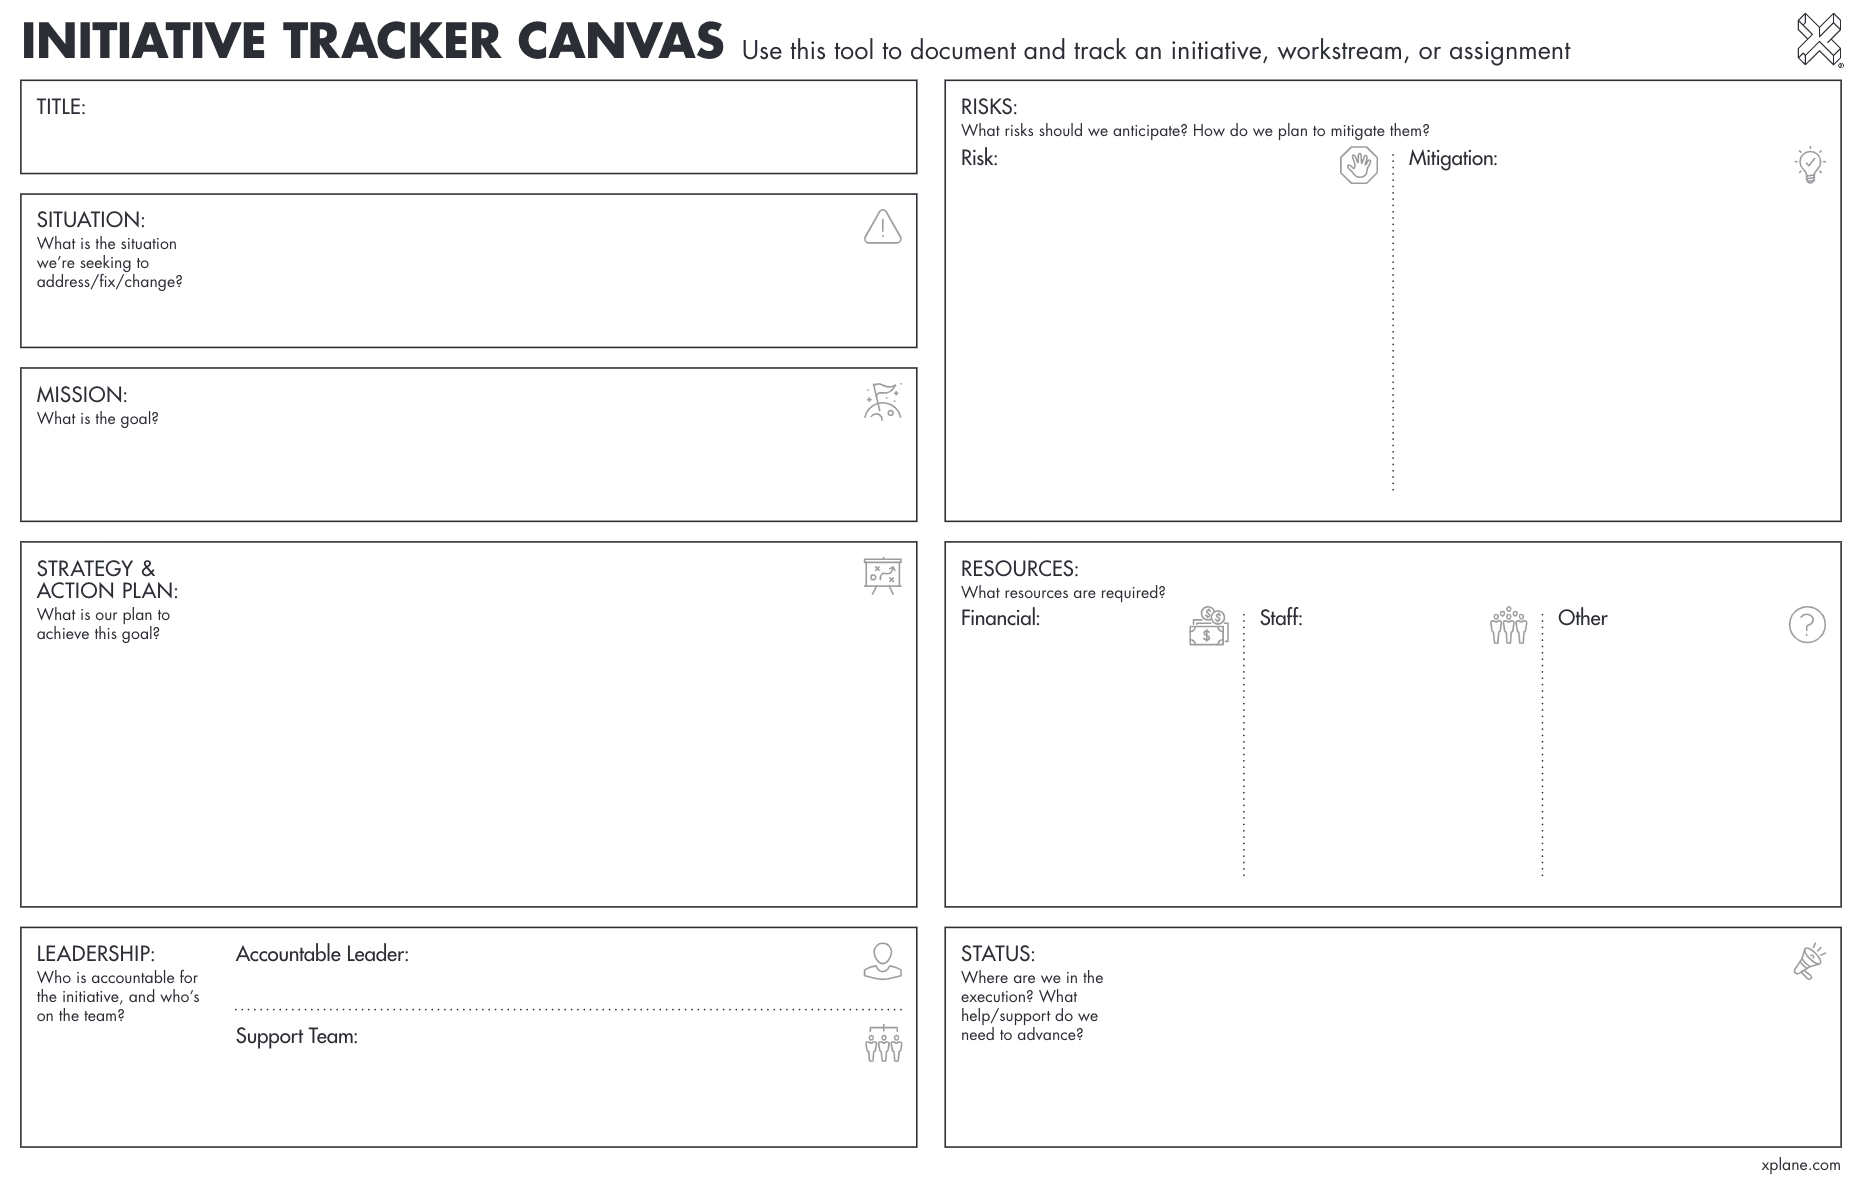 Initiative Tracker Canvas